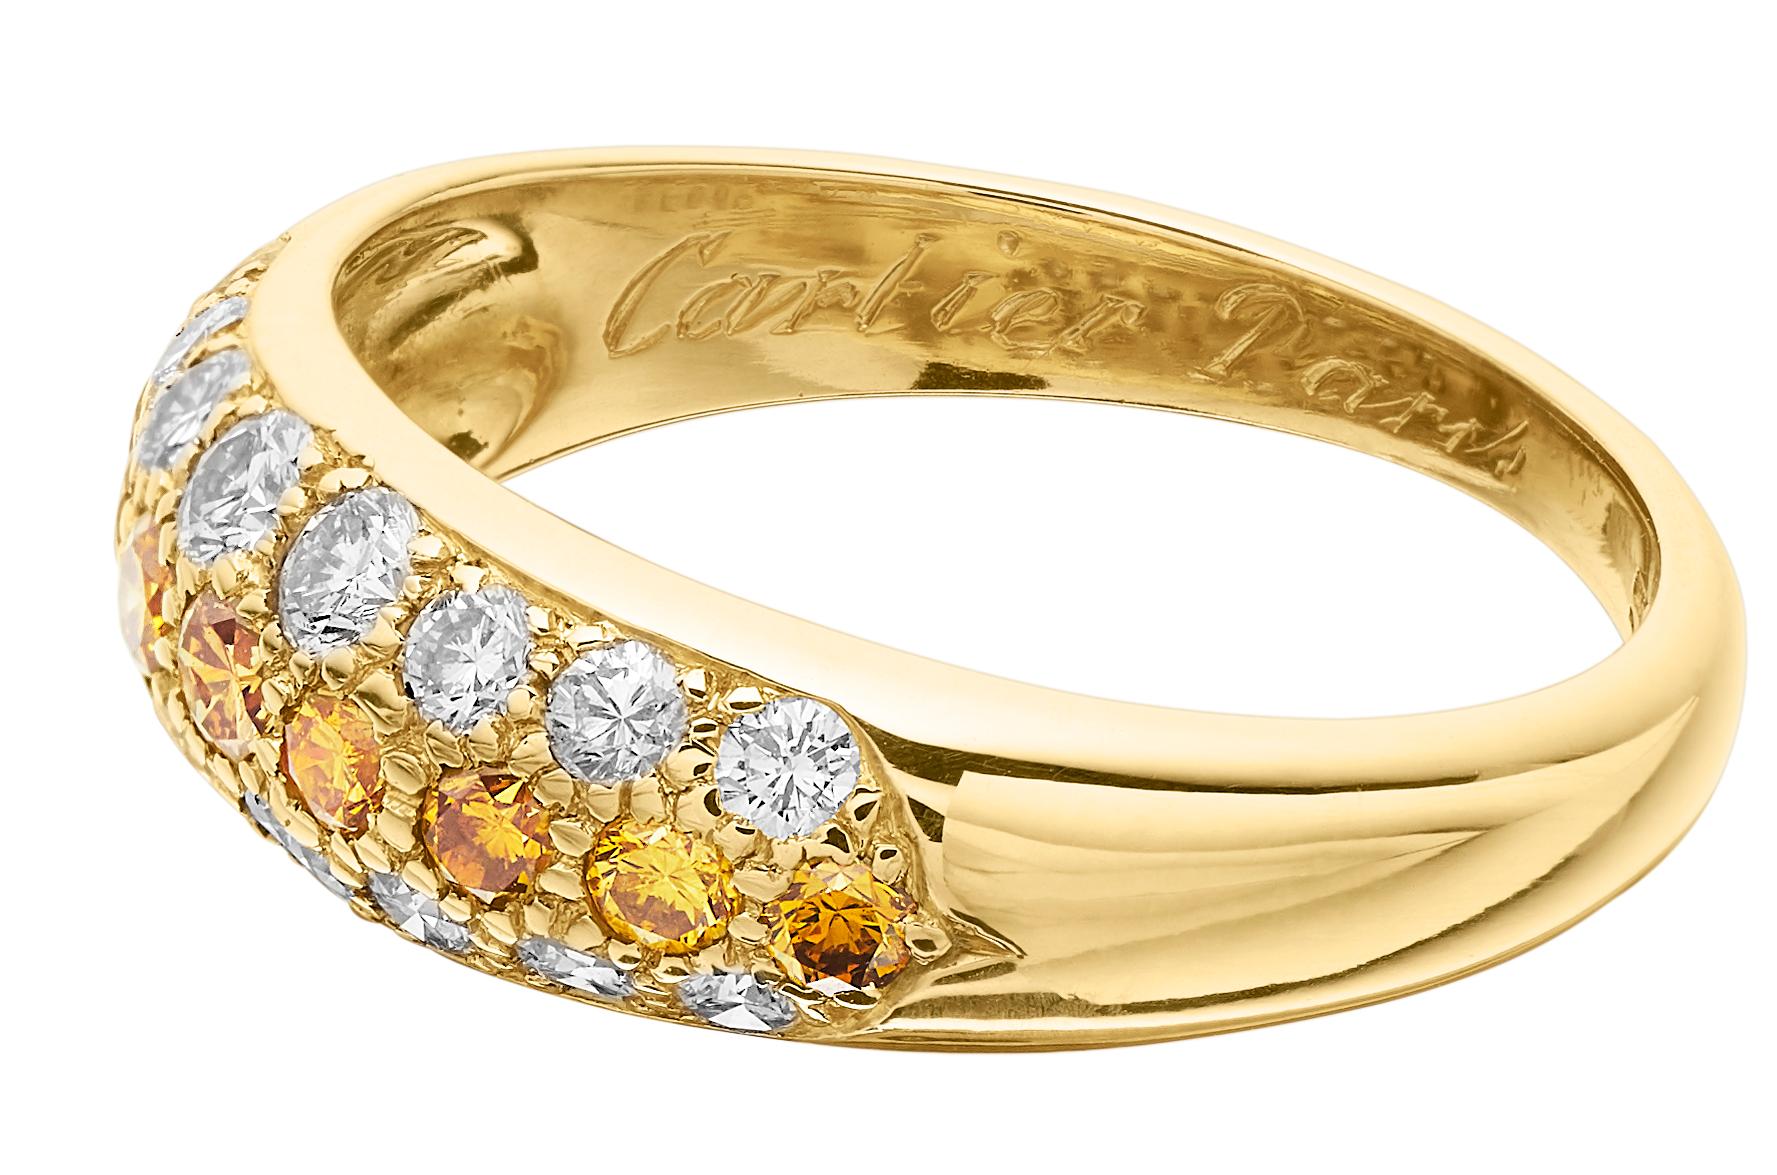 4.5ct 18ct yellow gold tennis bracelet guaranteed g/h colour si purity natural diamonds